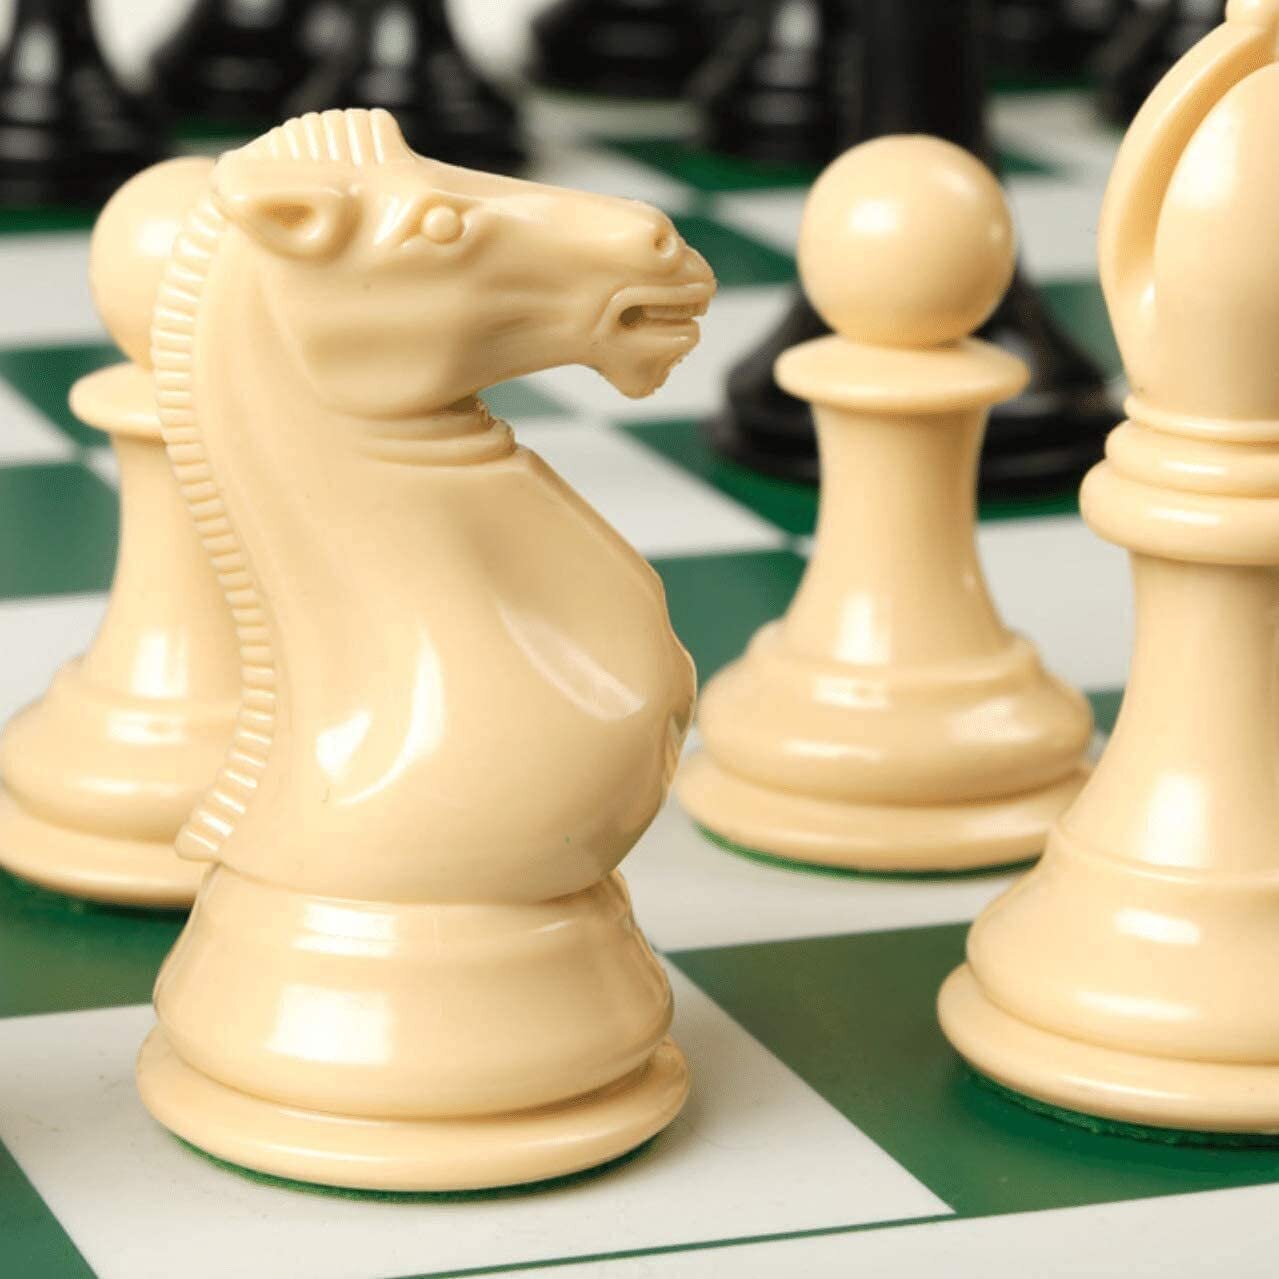 Best Chess Set Ever w/ 20 Black & Green Reversible Mat 